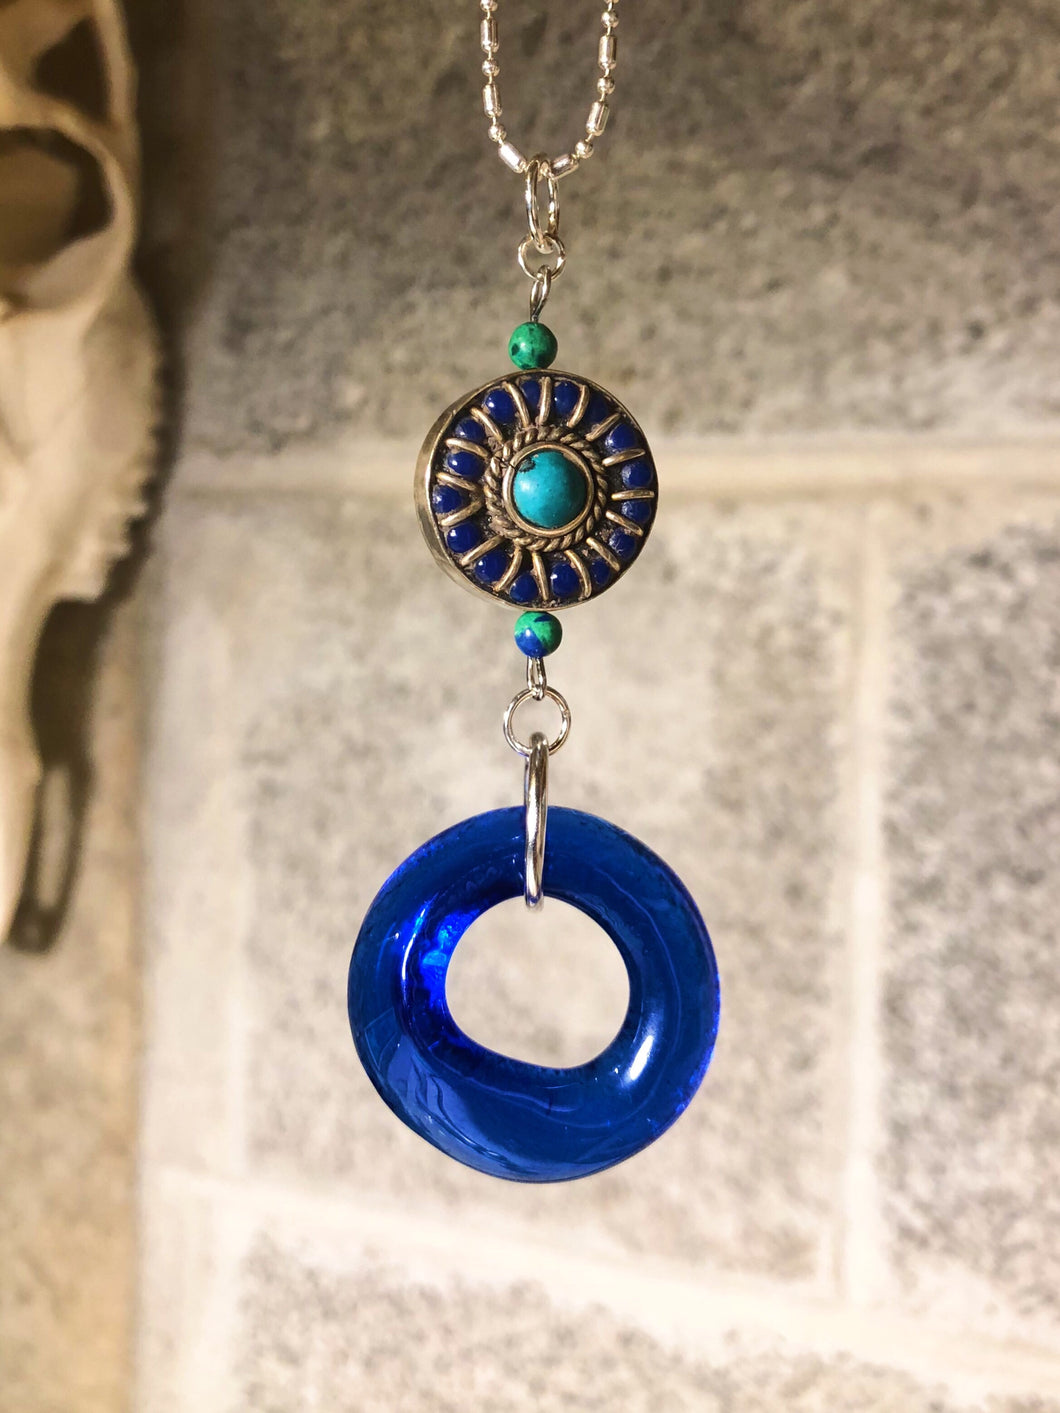 Upcycled Cobalt Blue Wine Bottle Pendant with Tibetan Bead